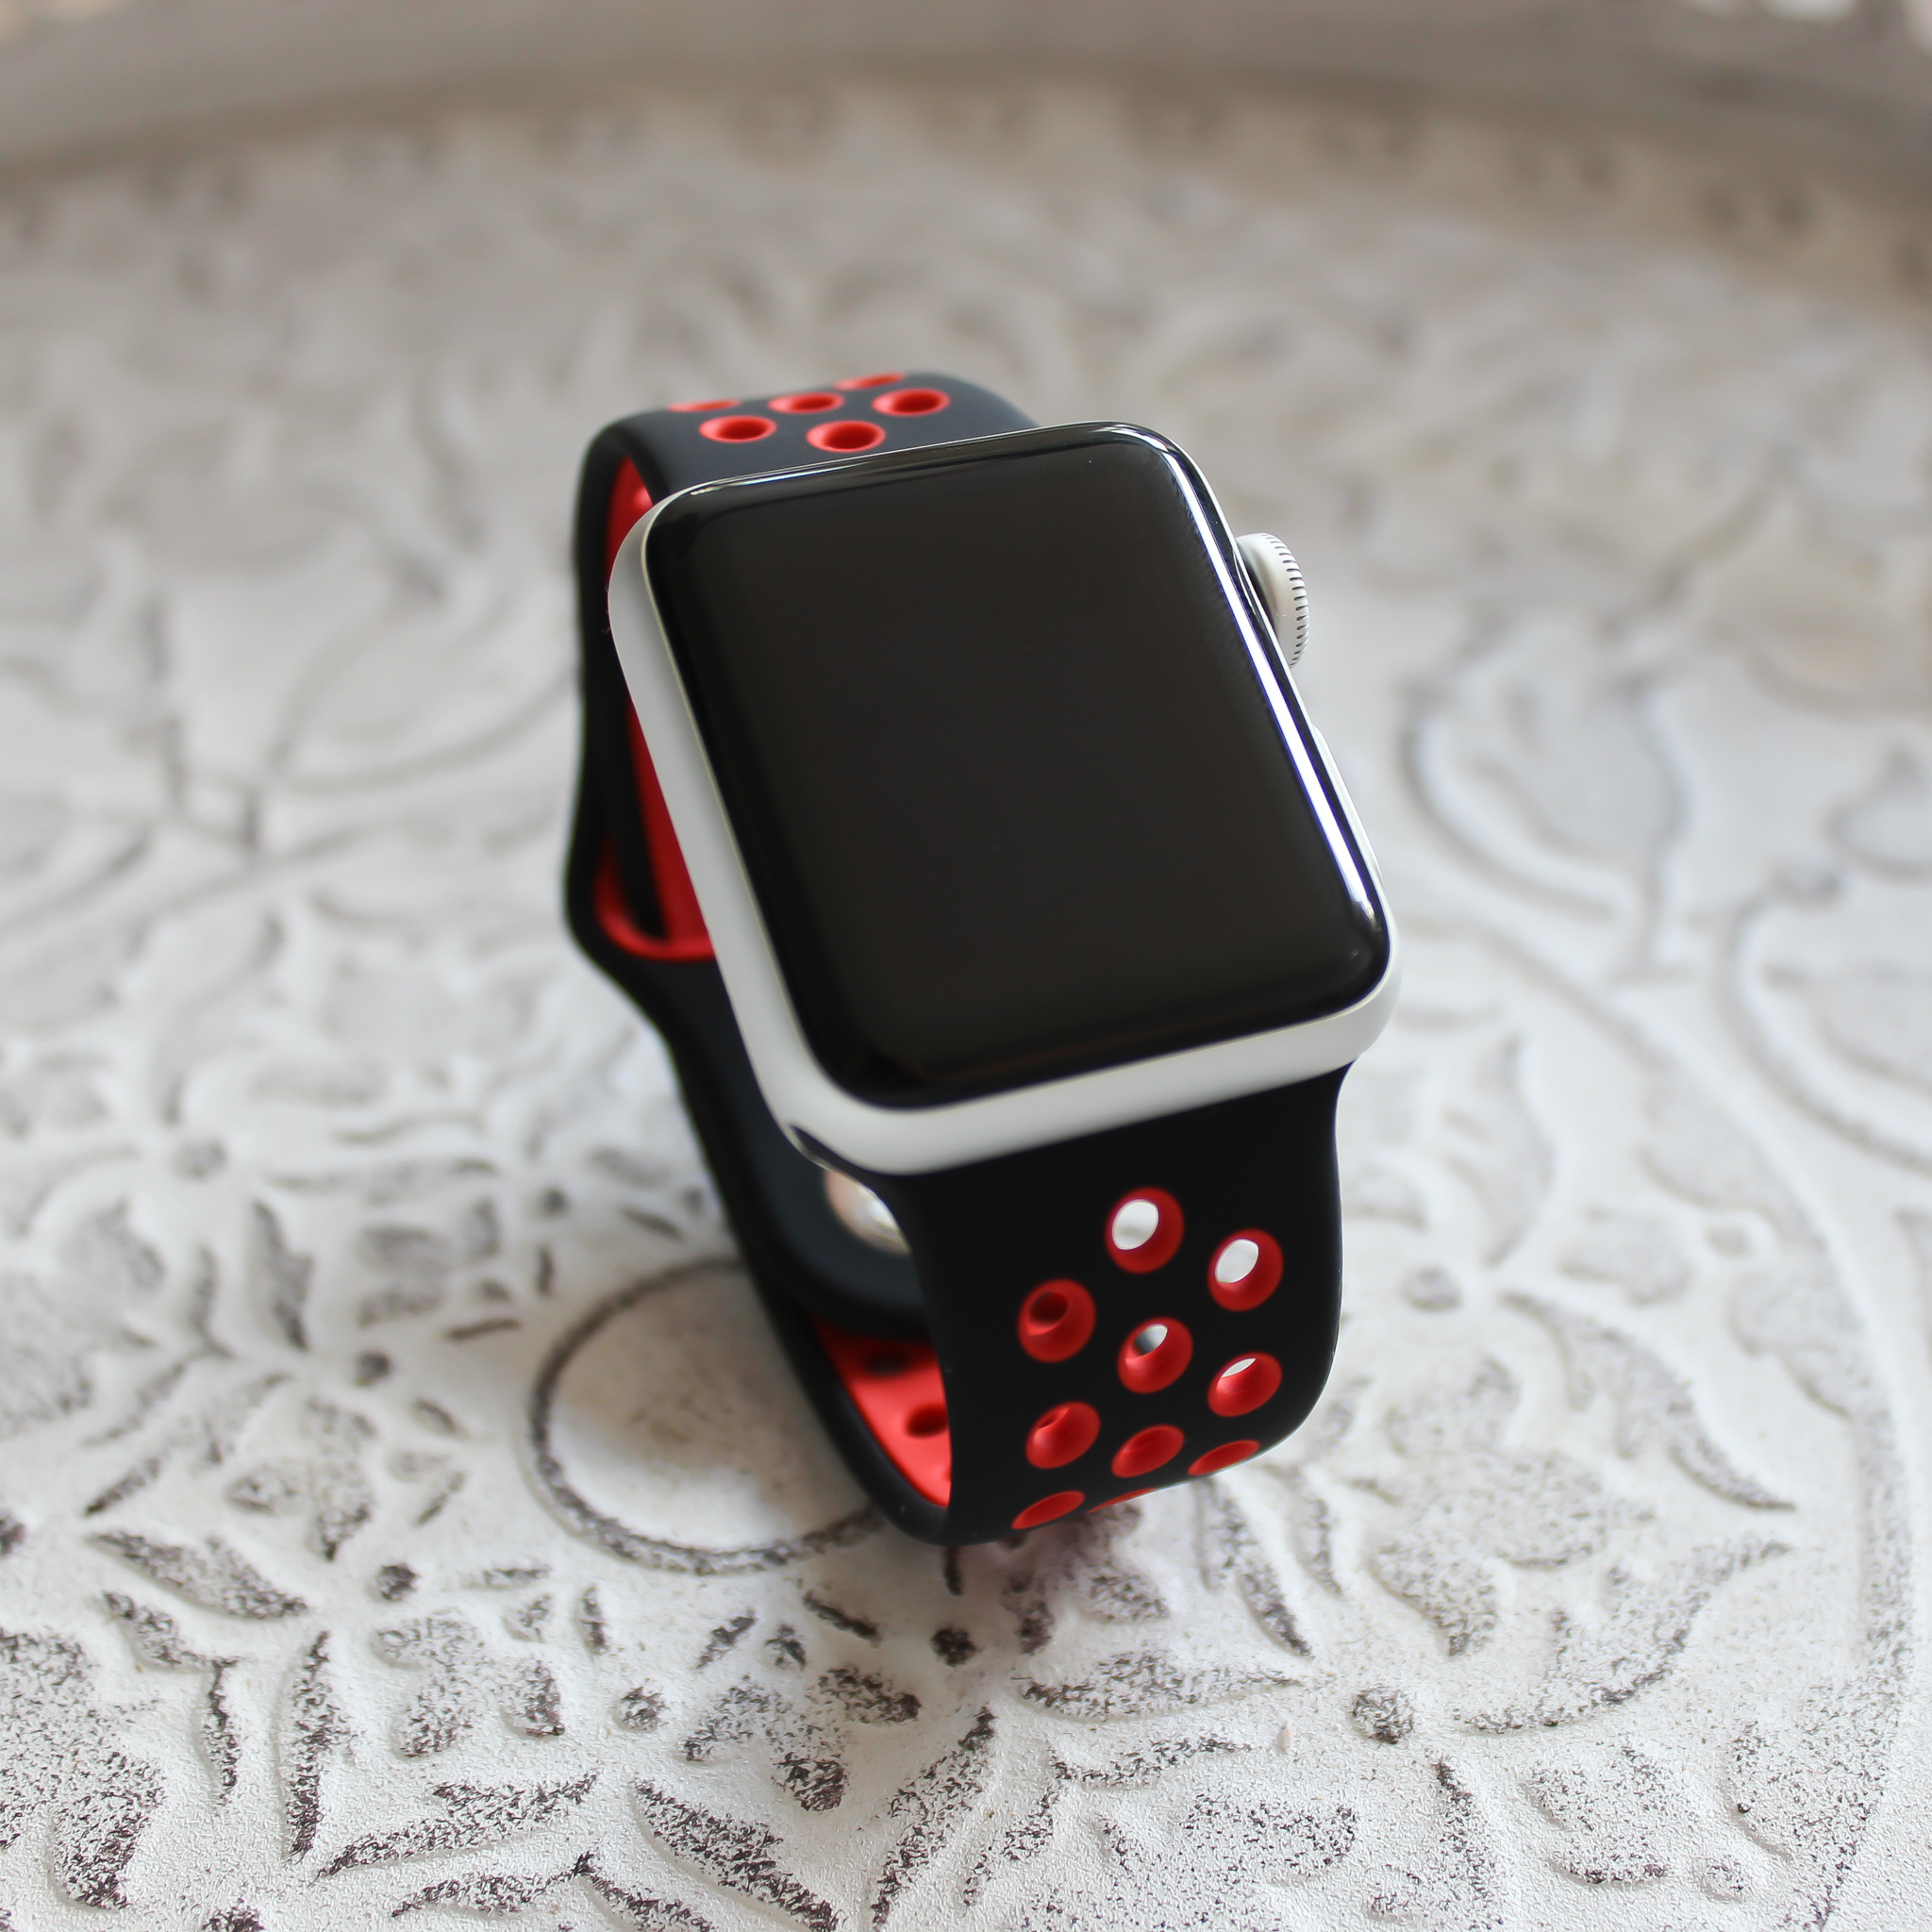  Apple Watch dupla sport szalag - fekete piros